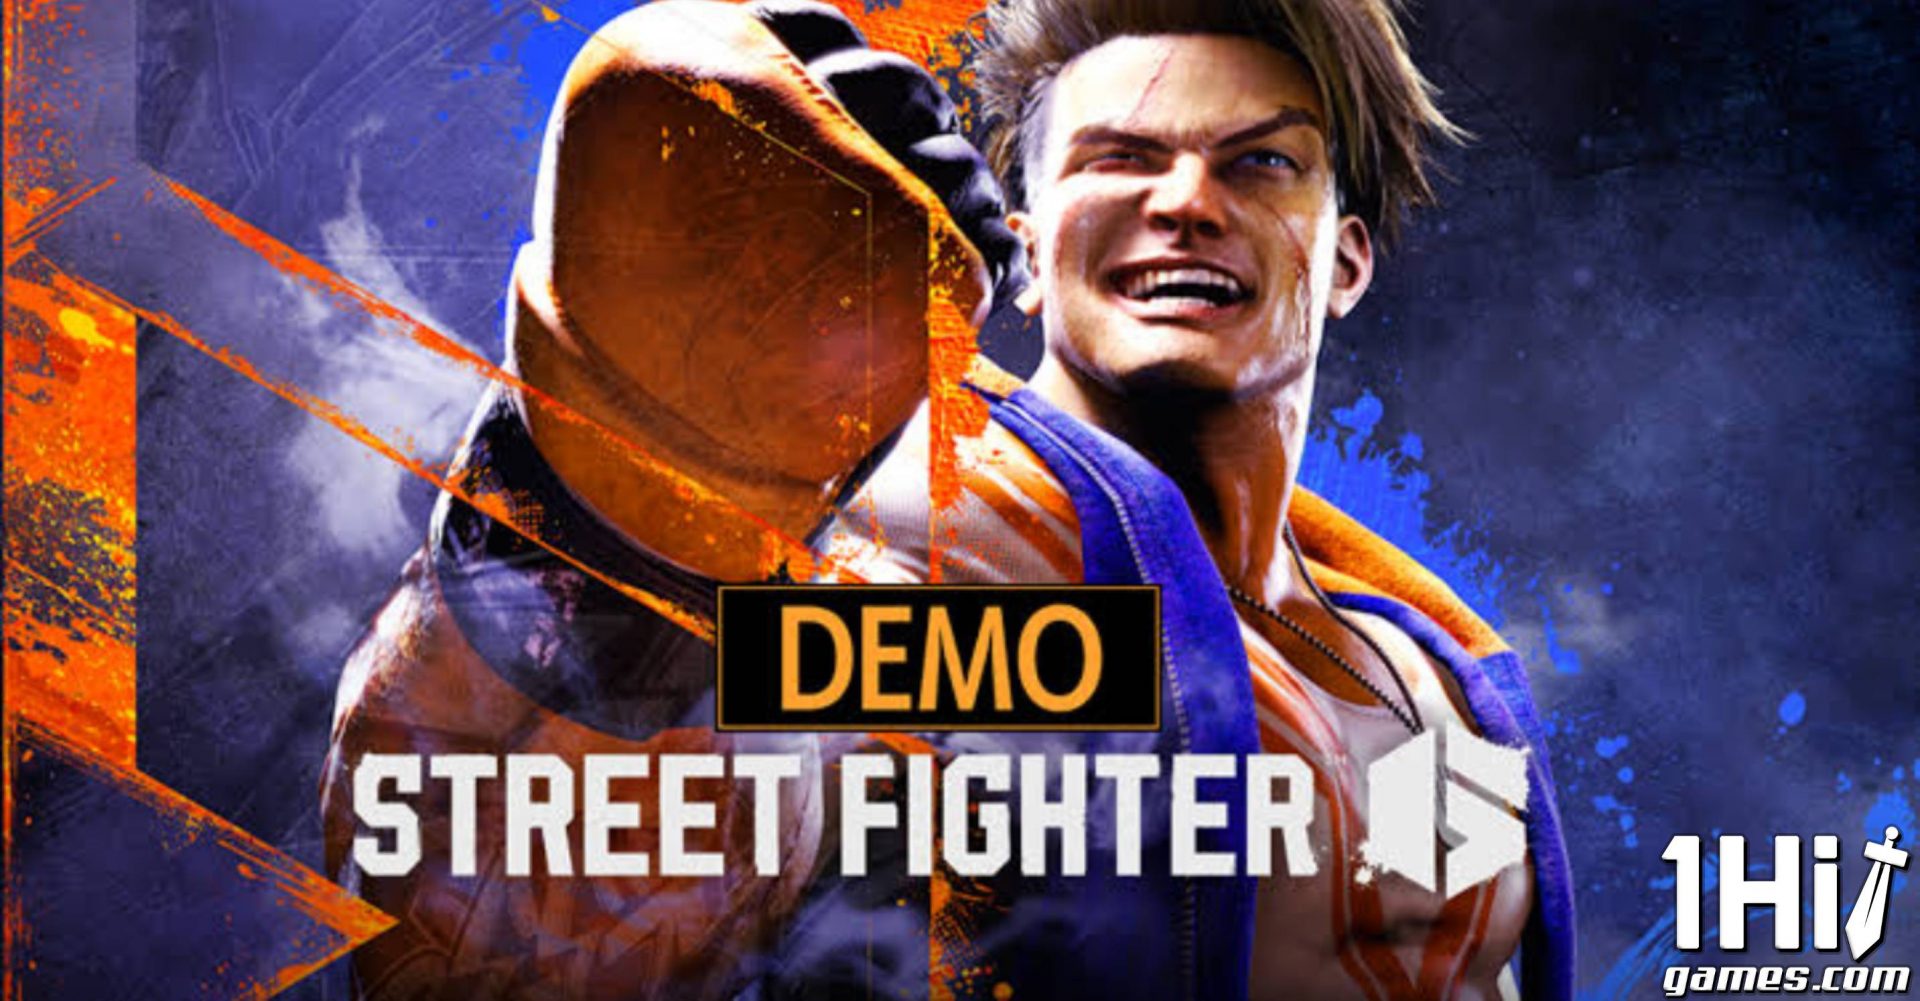 Demo de Street Fighter 6 para PC e consoles